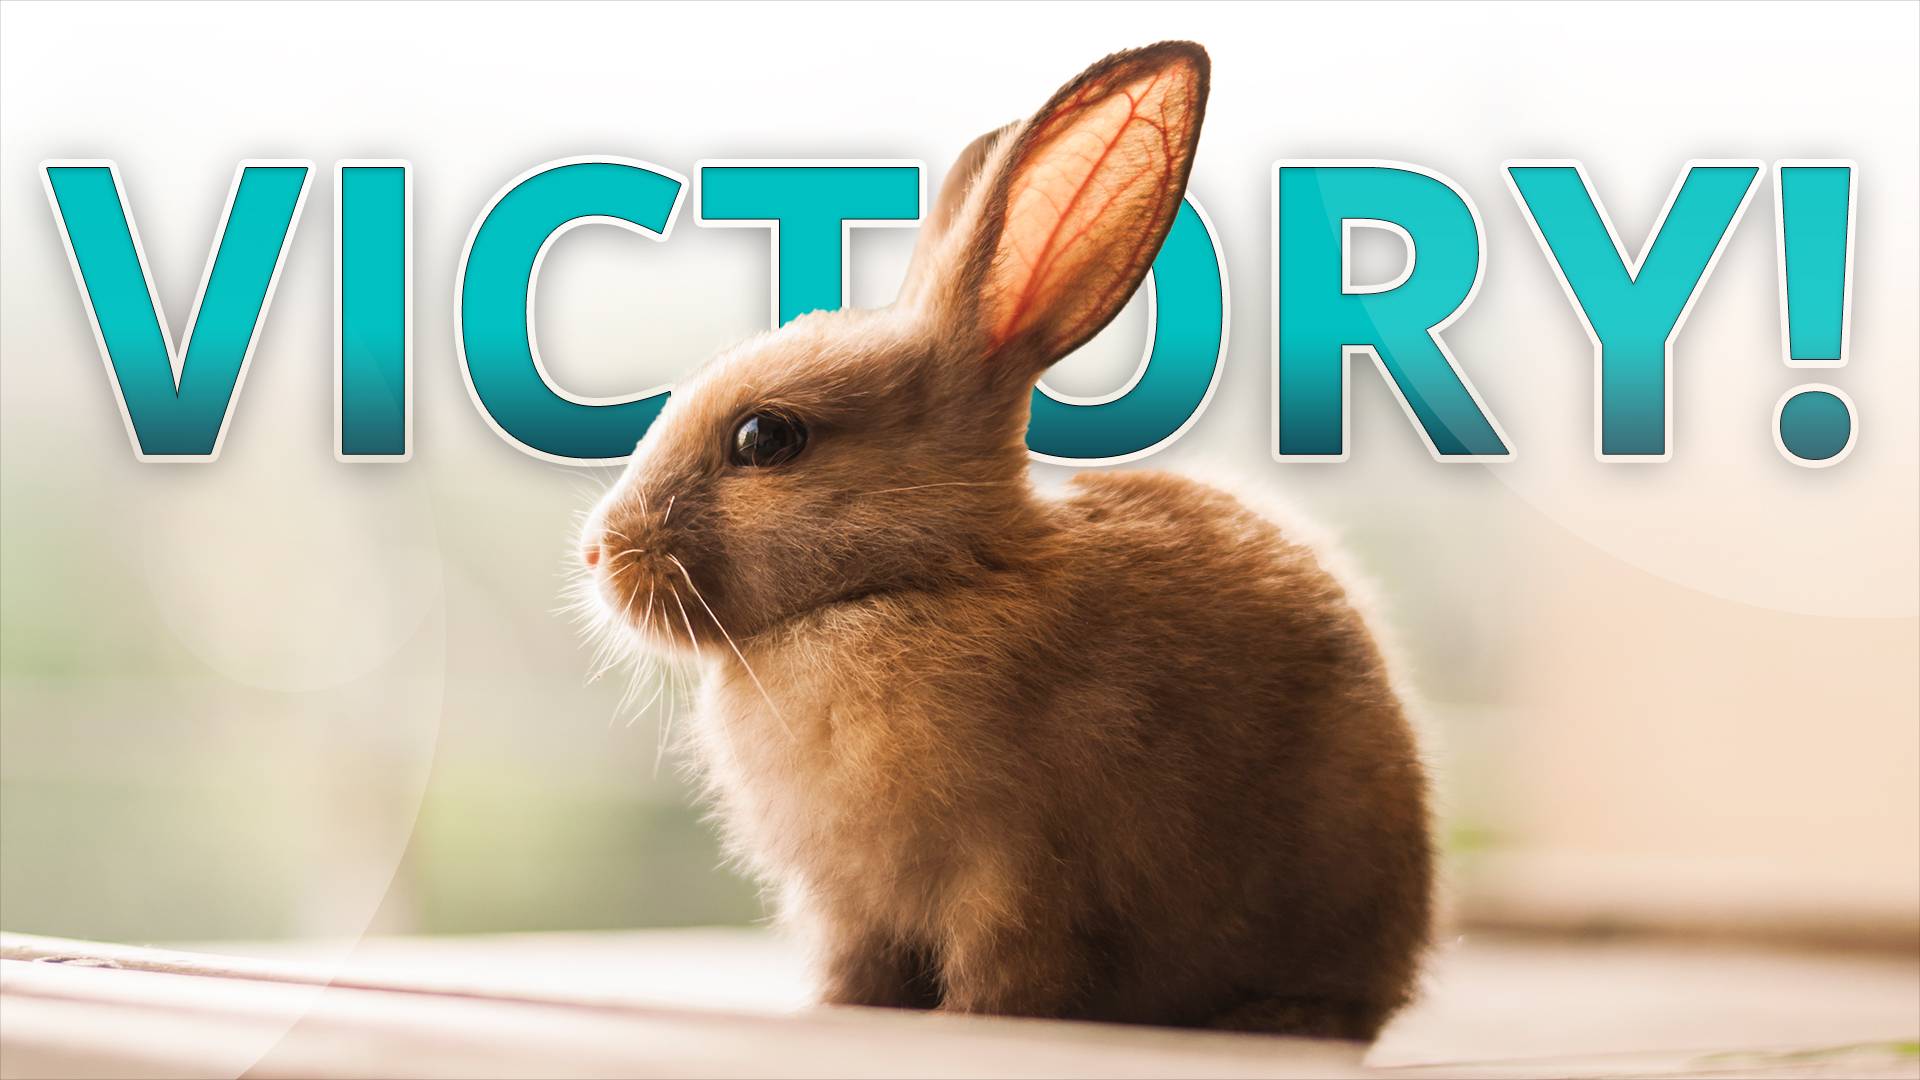 Victory for Animals: . Senate Drops Harmful Cosmetics Provision